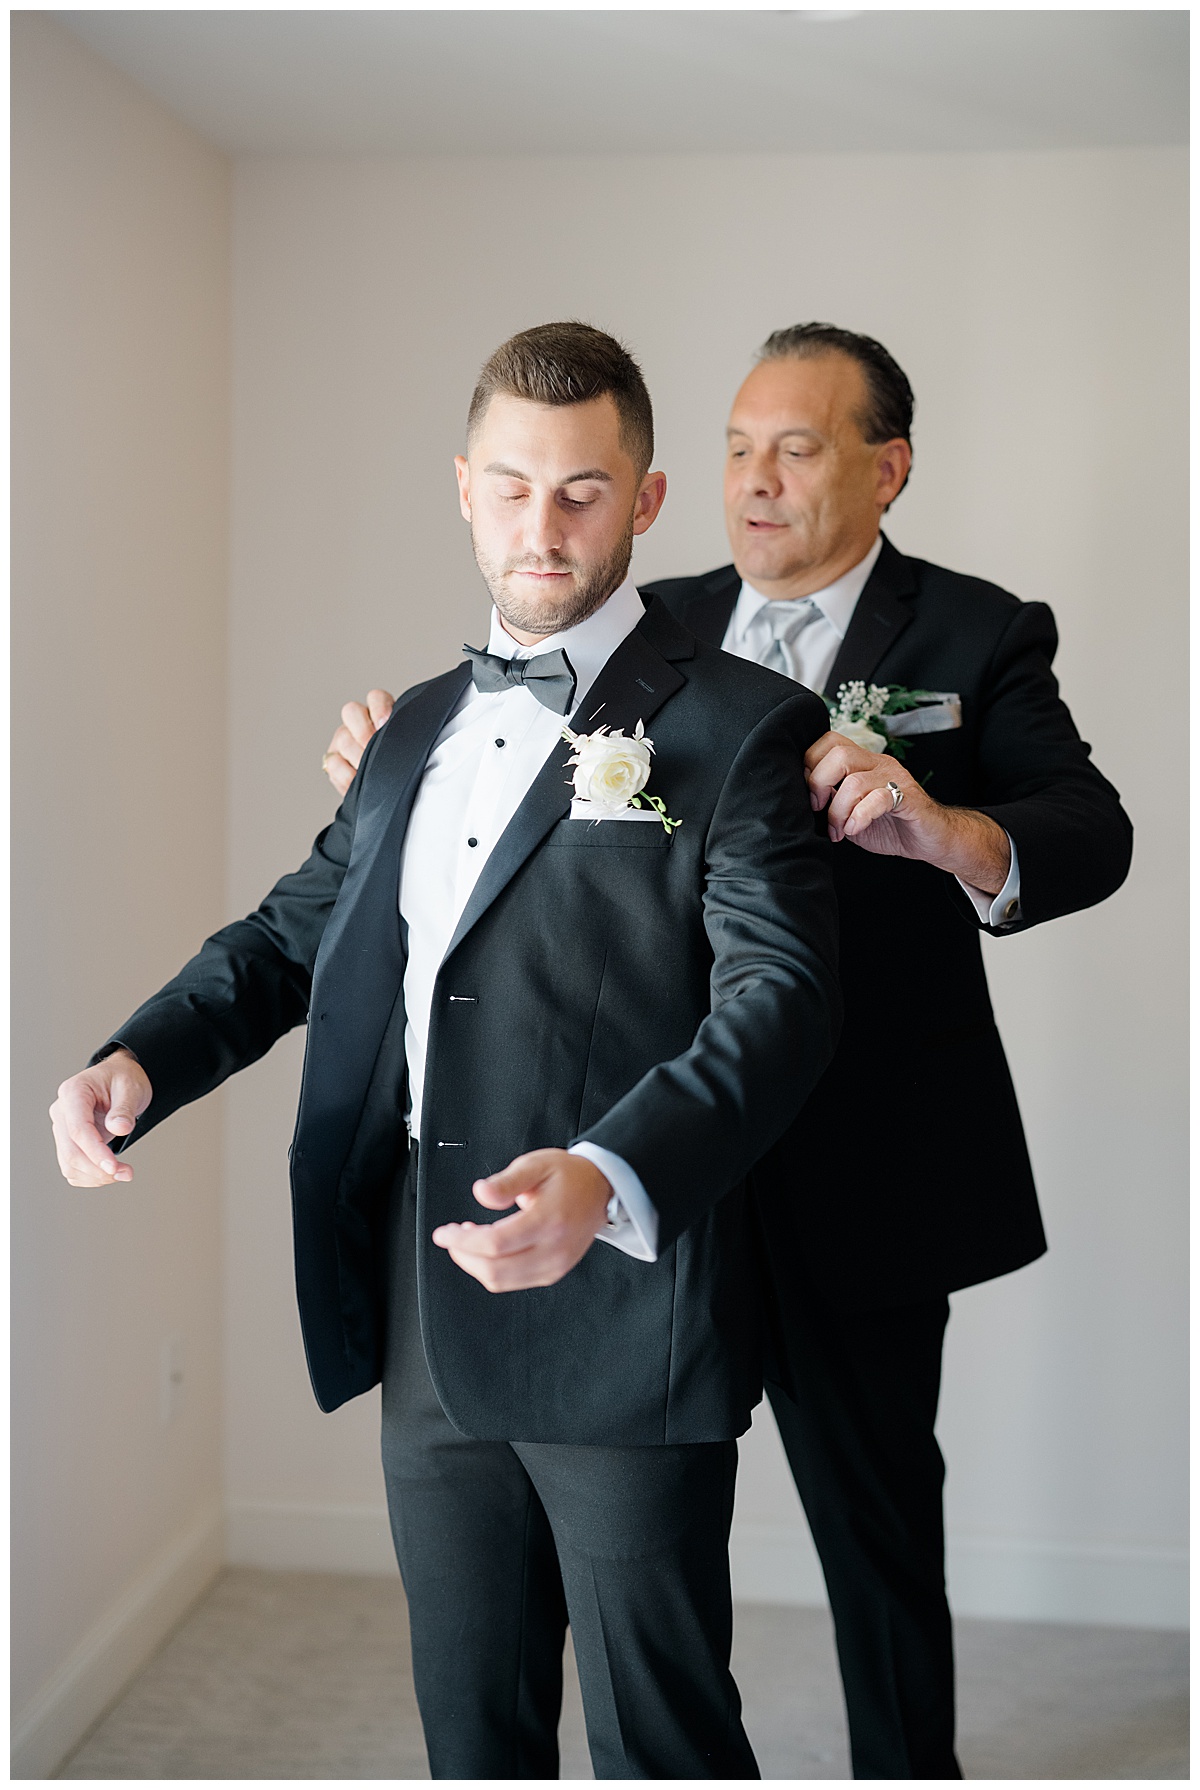 Dad helping groom get dressed on wedding day. 